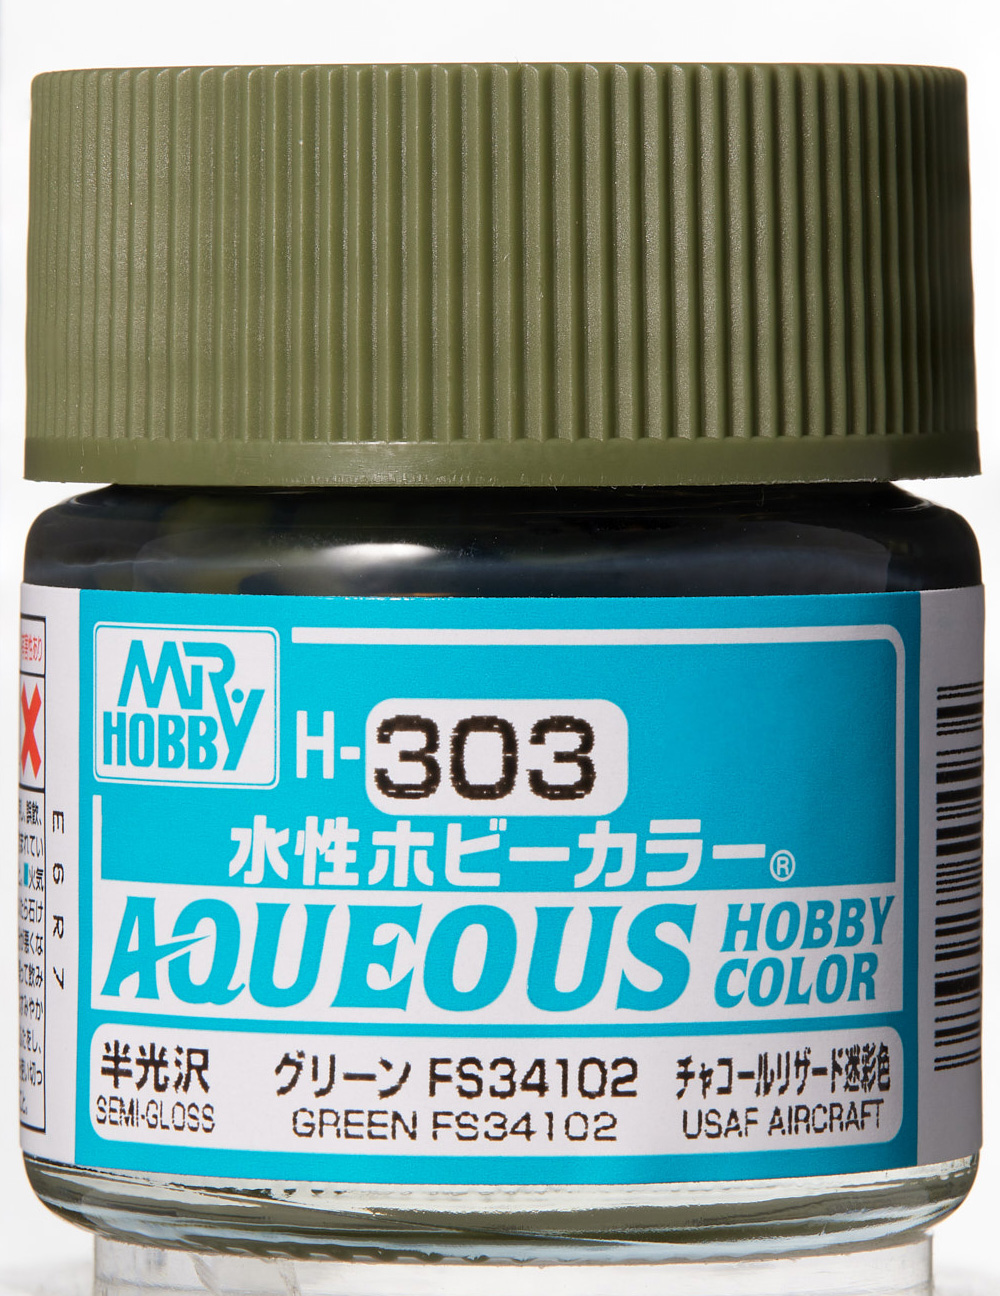 Mr. Aqueous Hobby Color - Green FS34102 - H303 - Grün FS34102